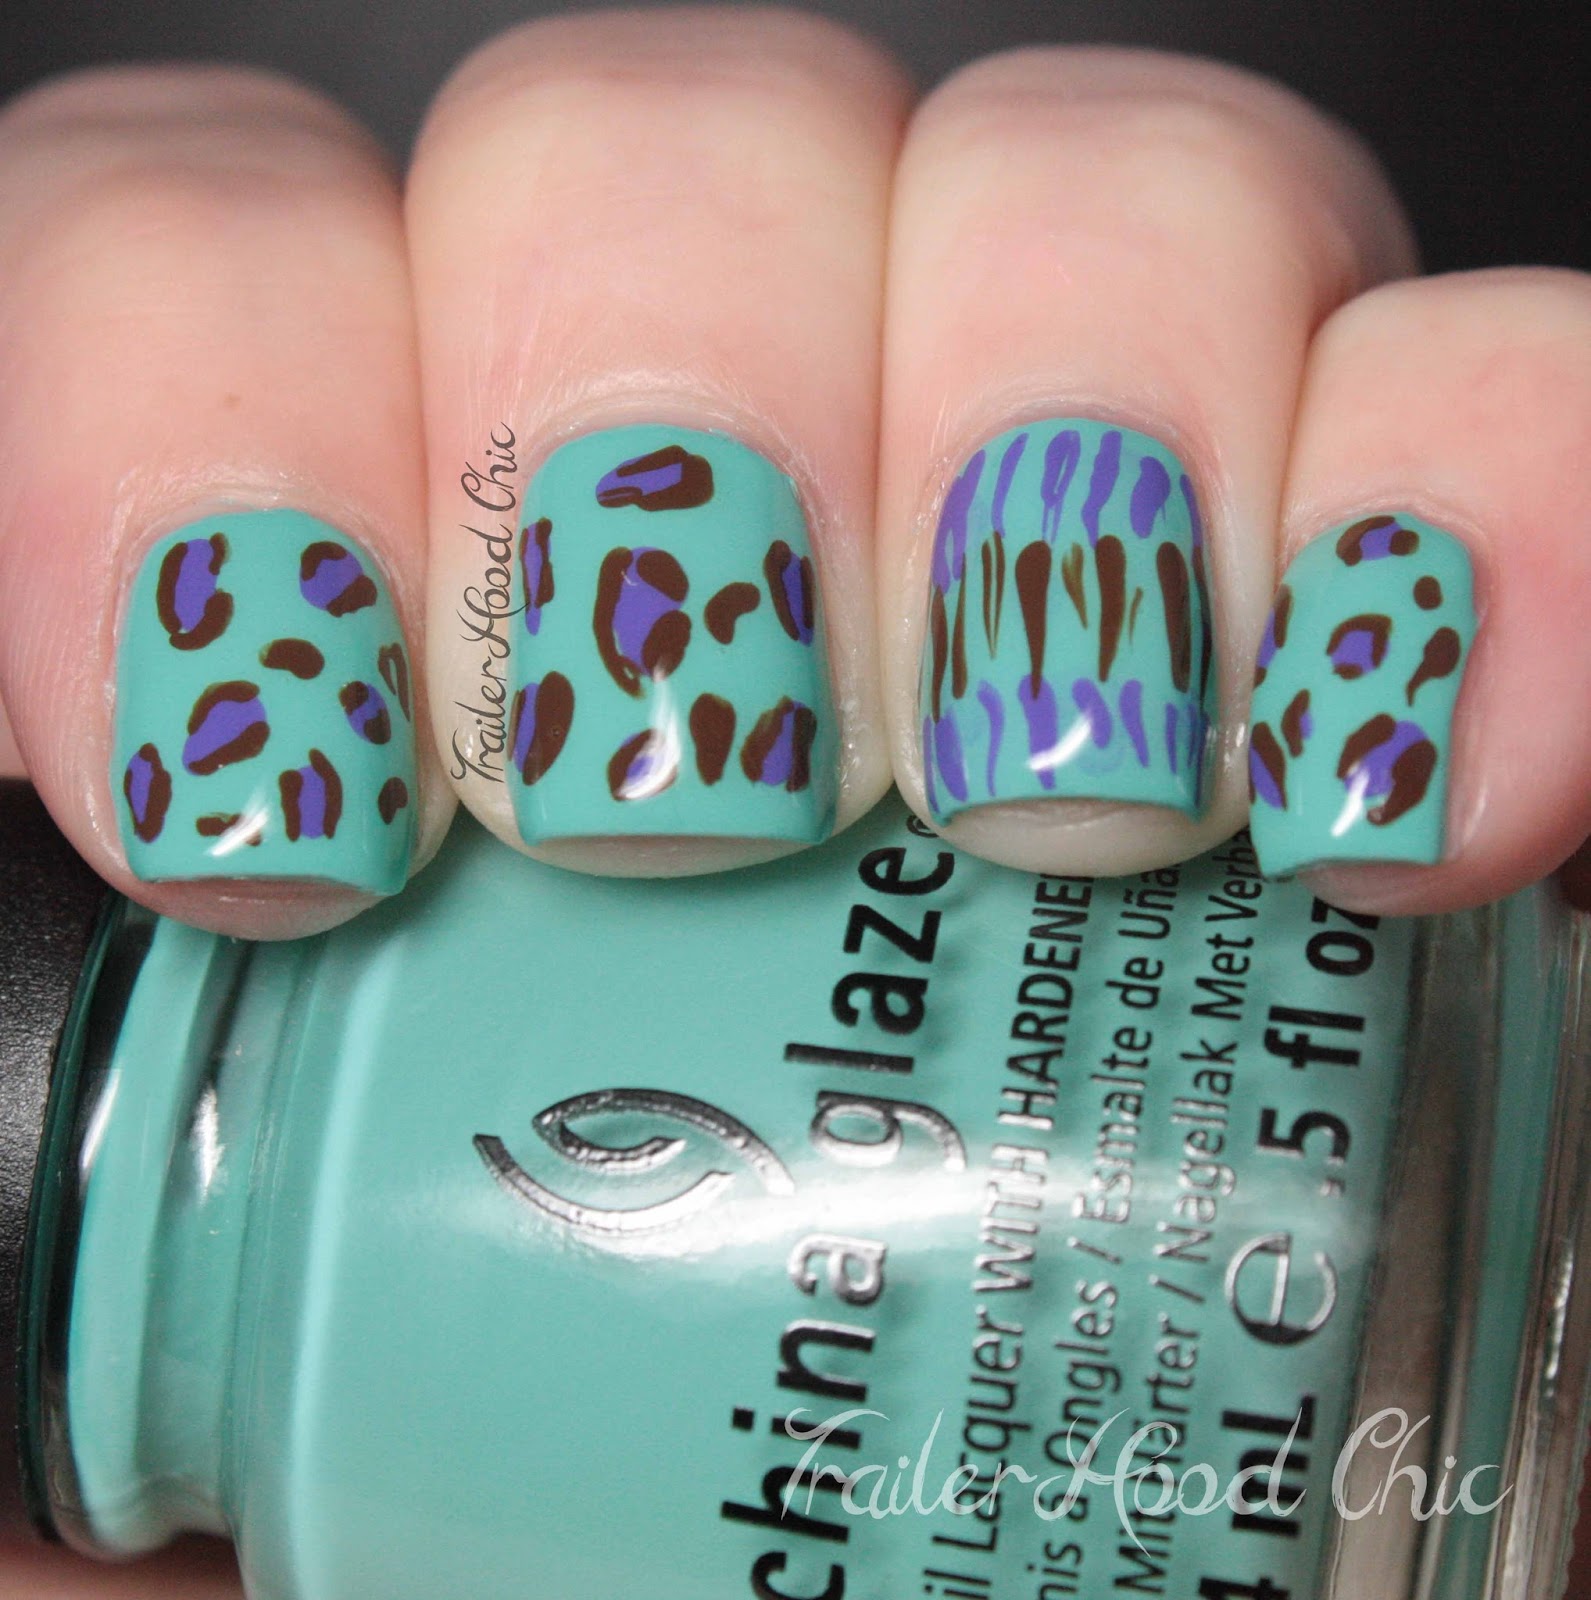 TrailerHood Chic: Aqua Leopard Nails